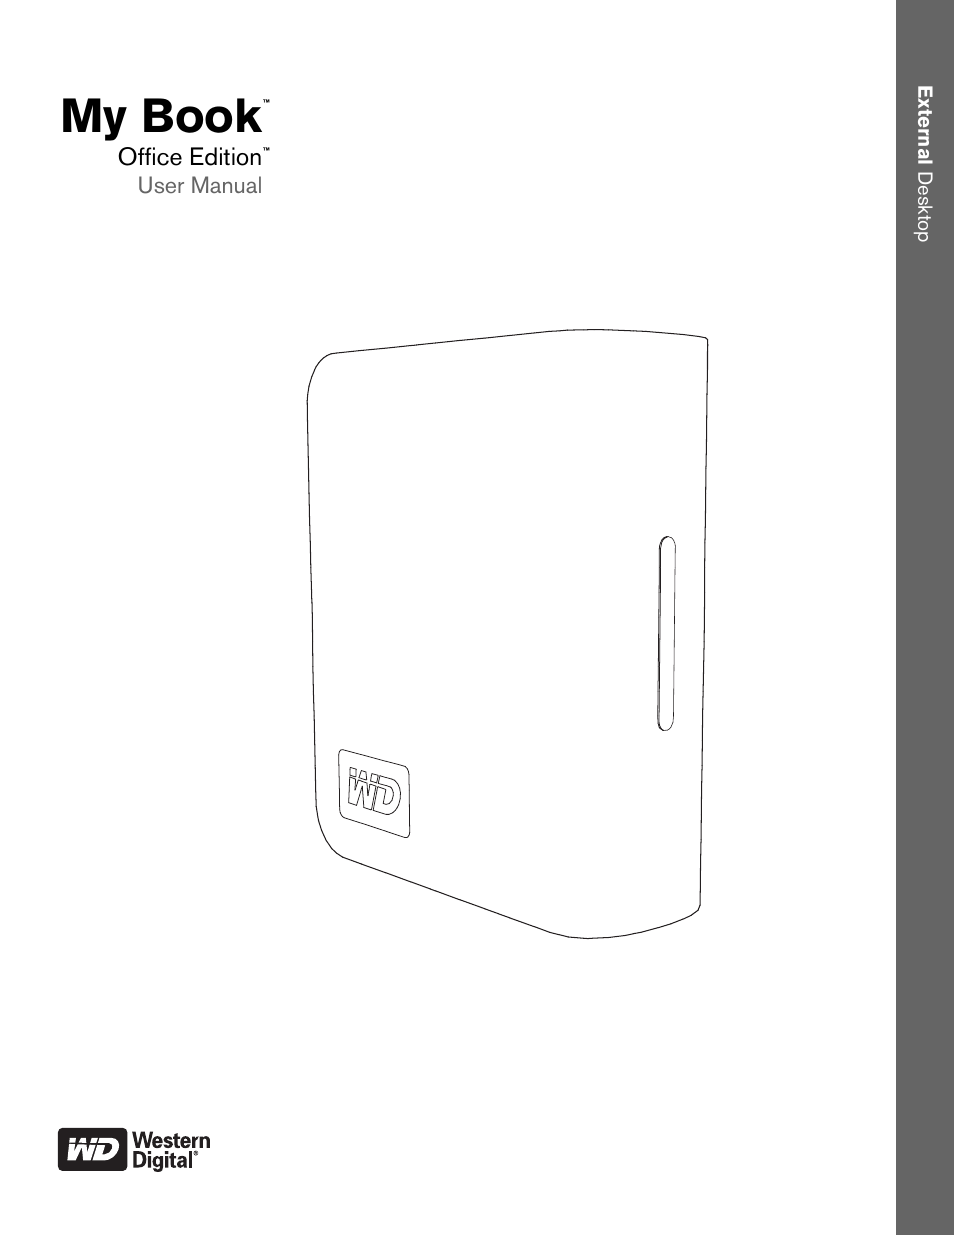 Western Digital 4779 705004 User Manual | 9 pages